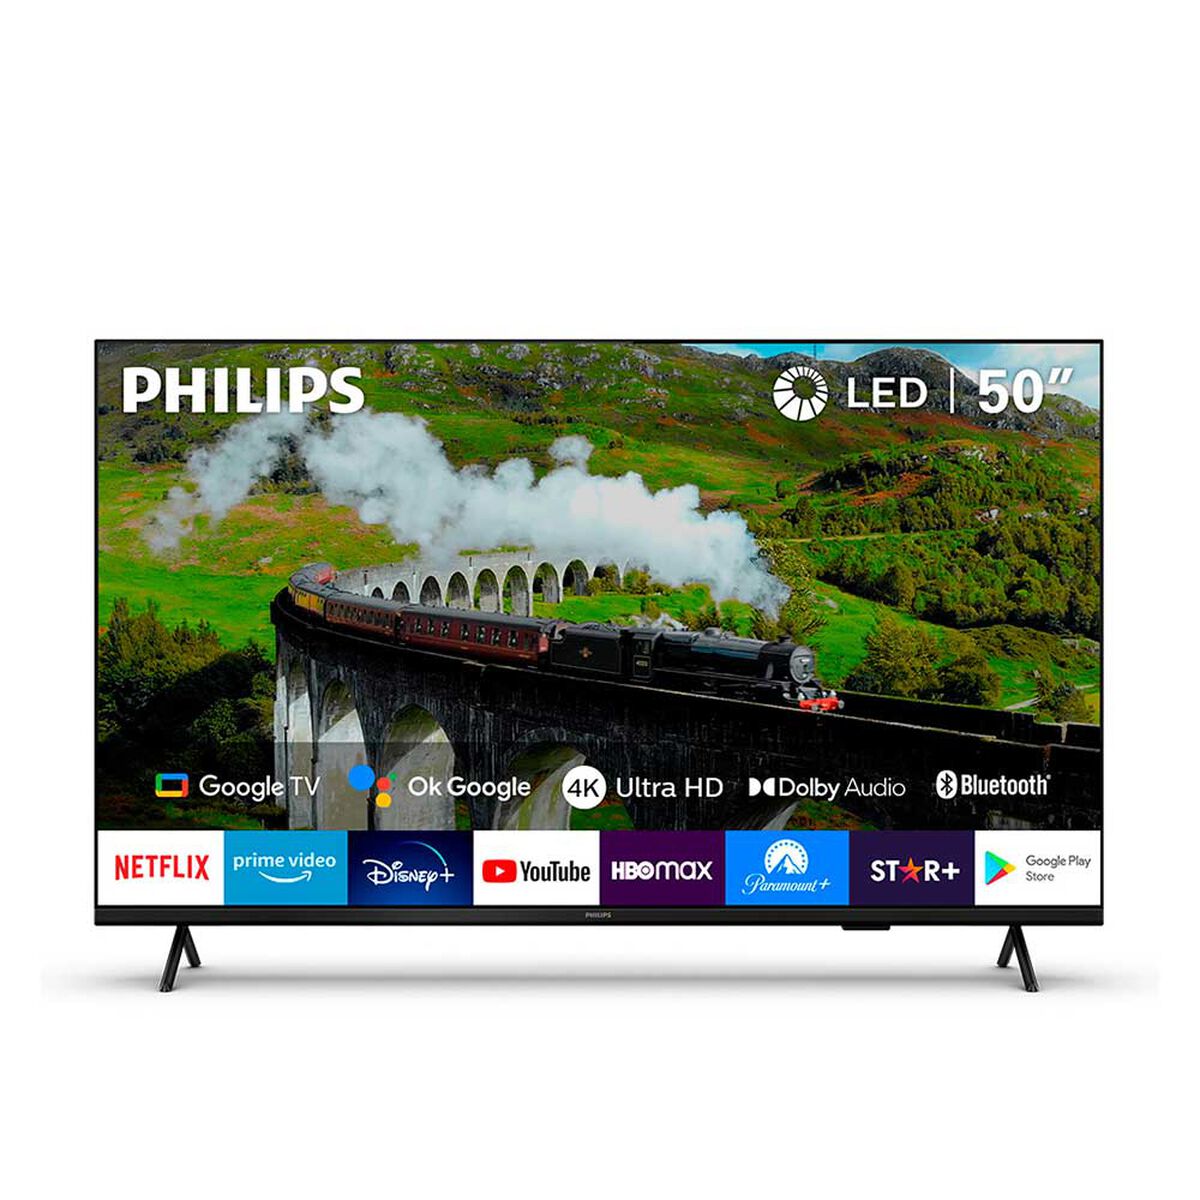 Led Uhd 4K Google Tv Philips 50Pud7408 50" [Openbox]